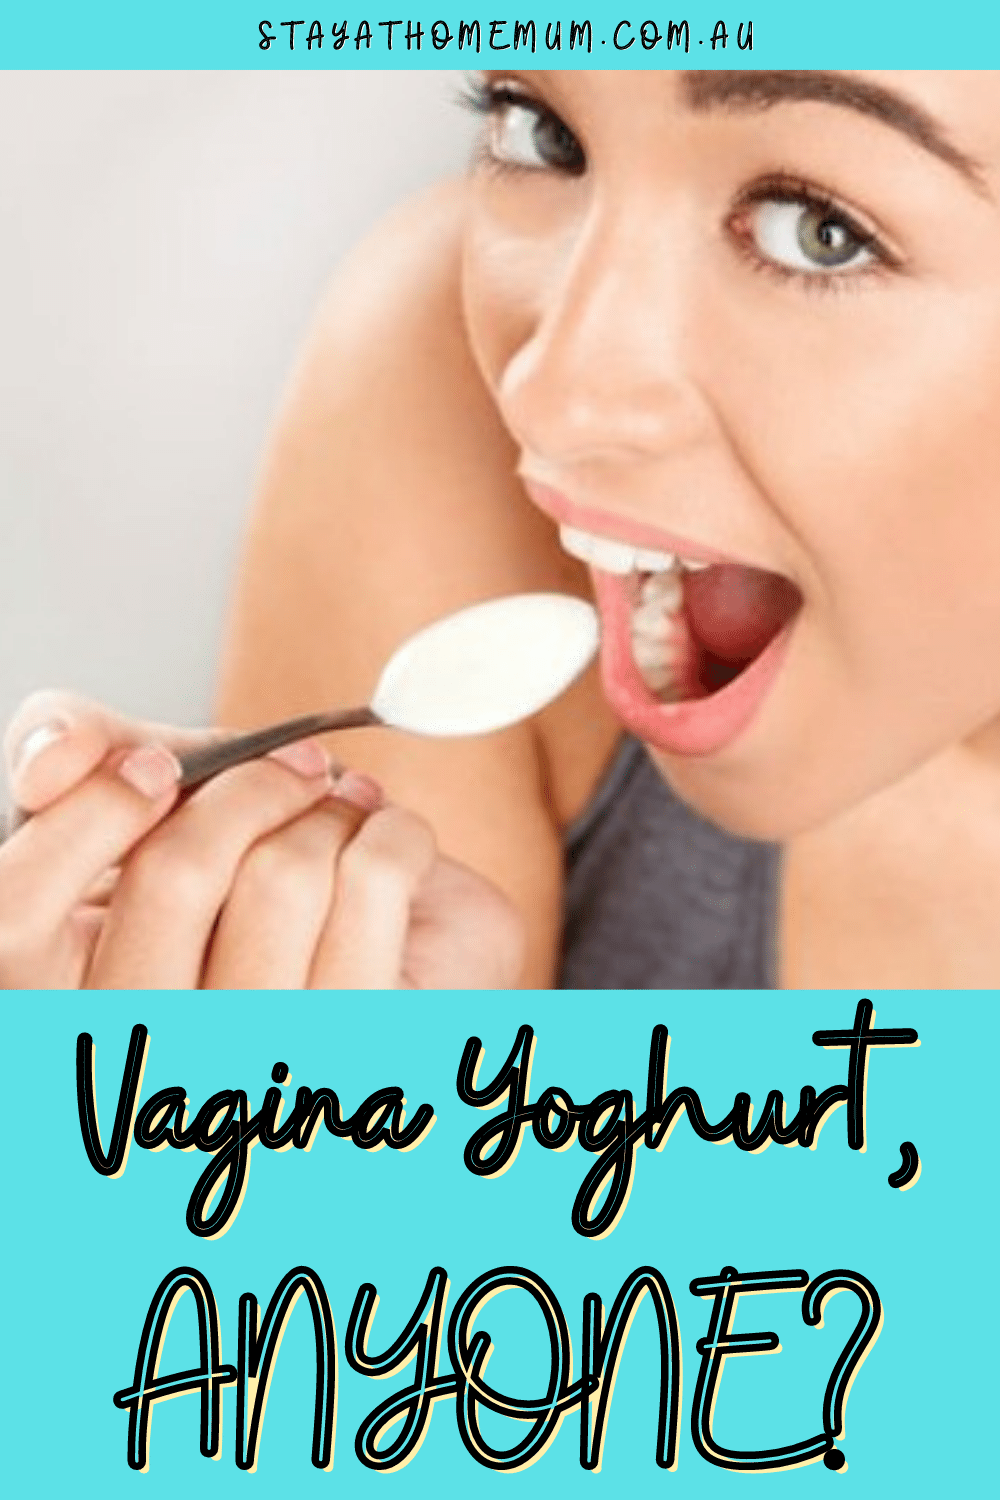 Vagina Yoghurt, Anyone? | Stay At Home Mum